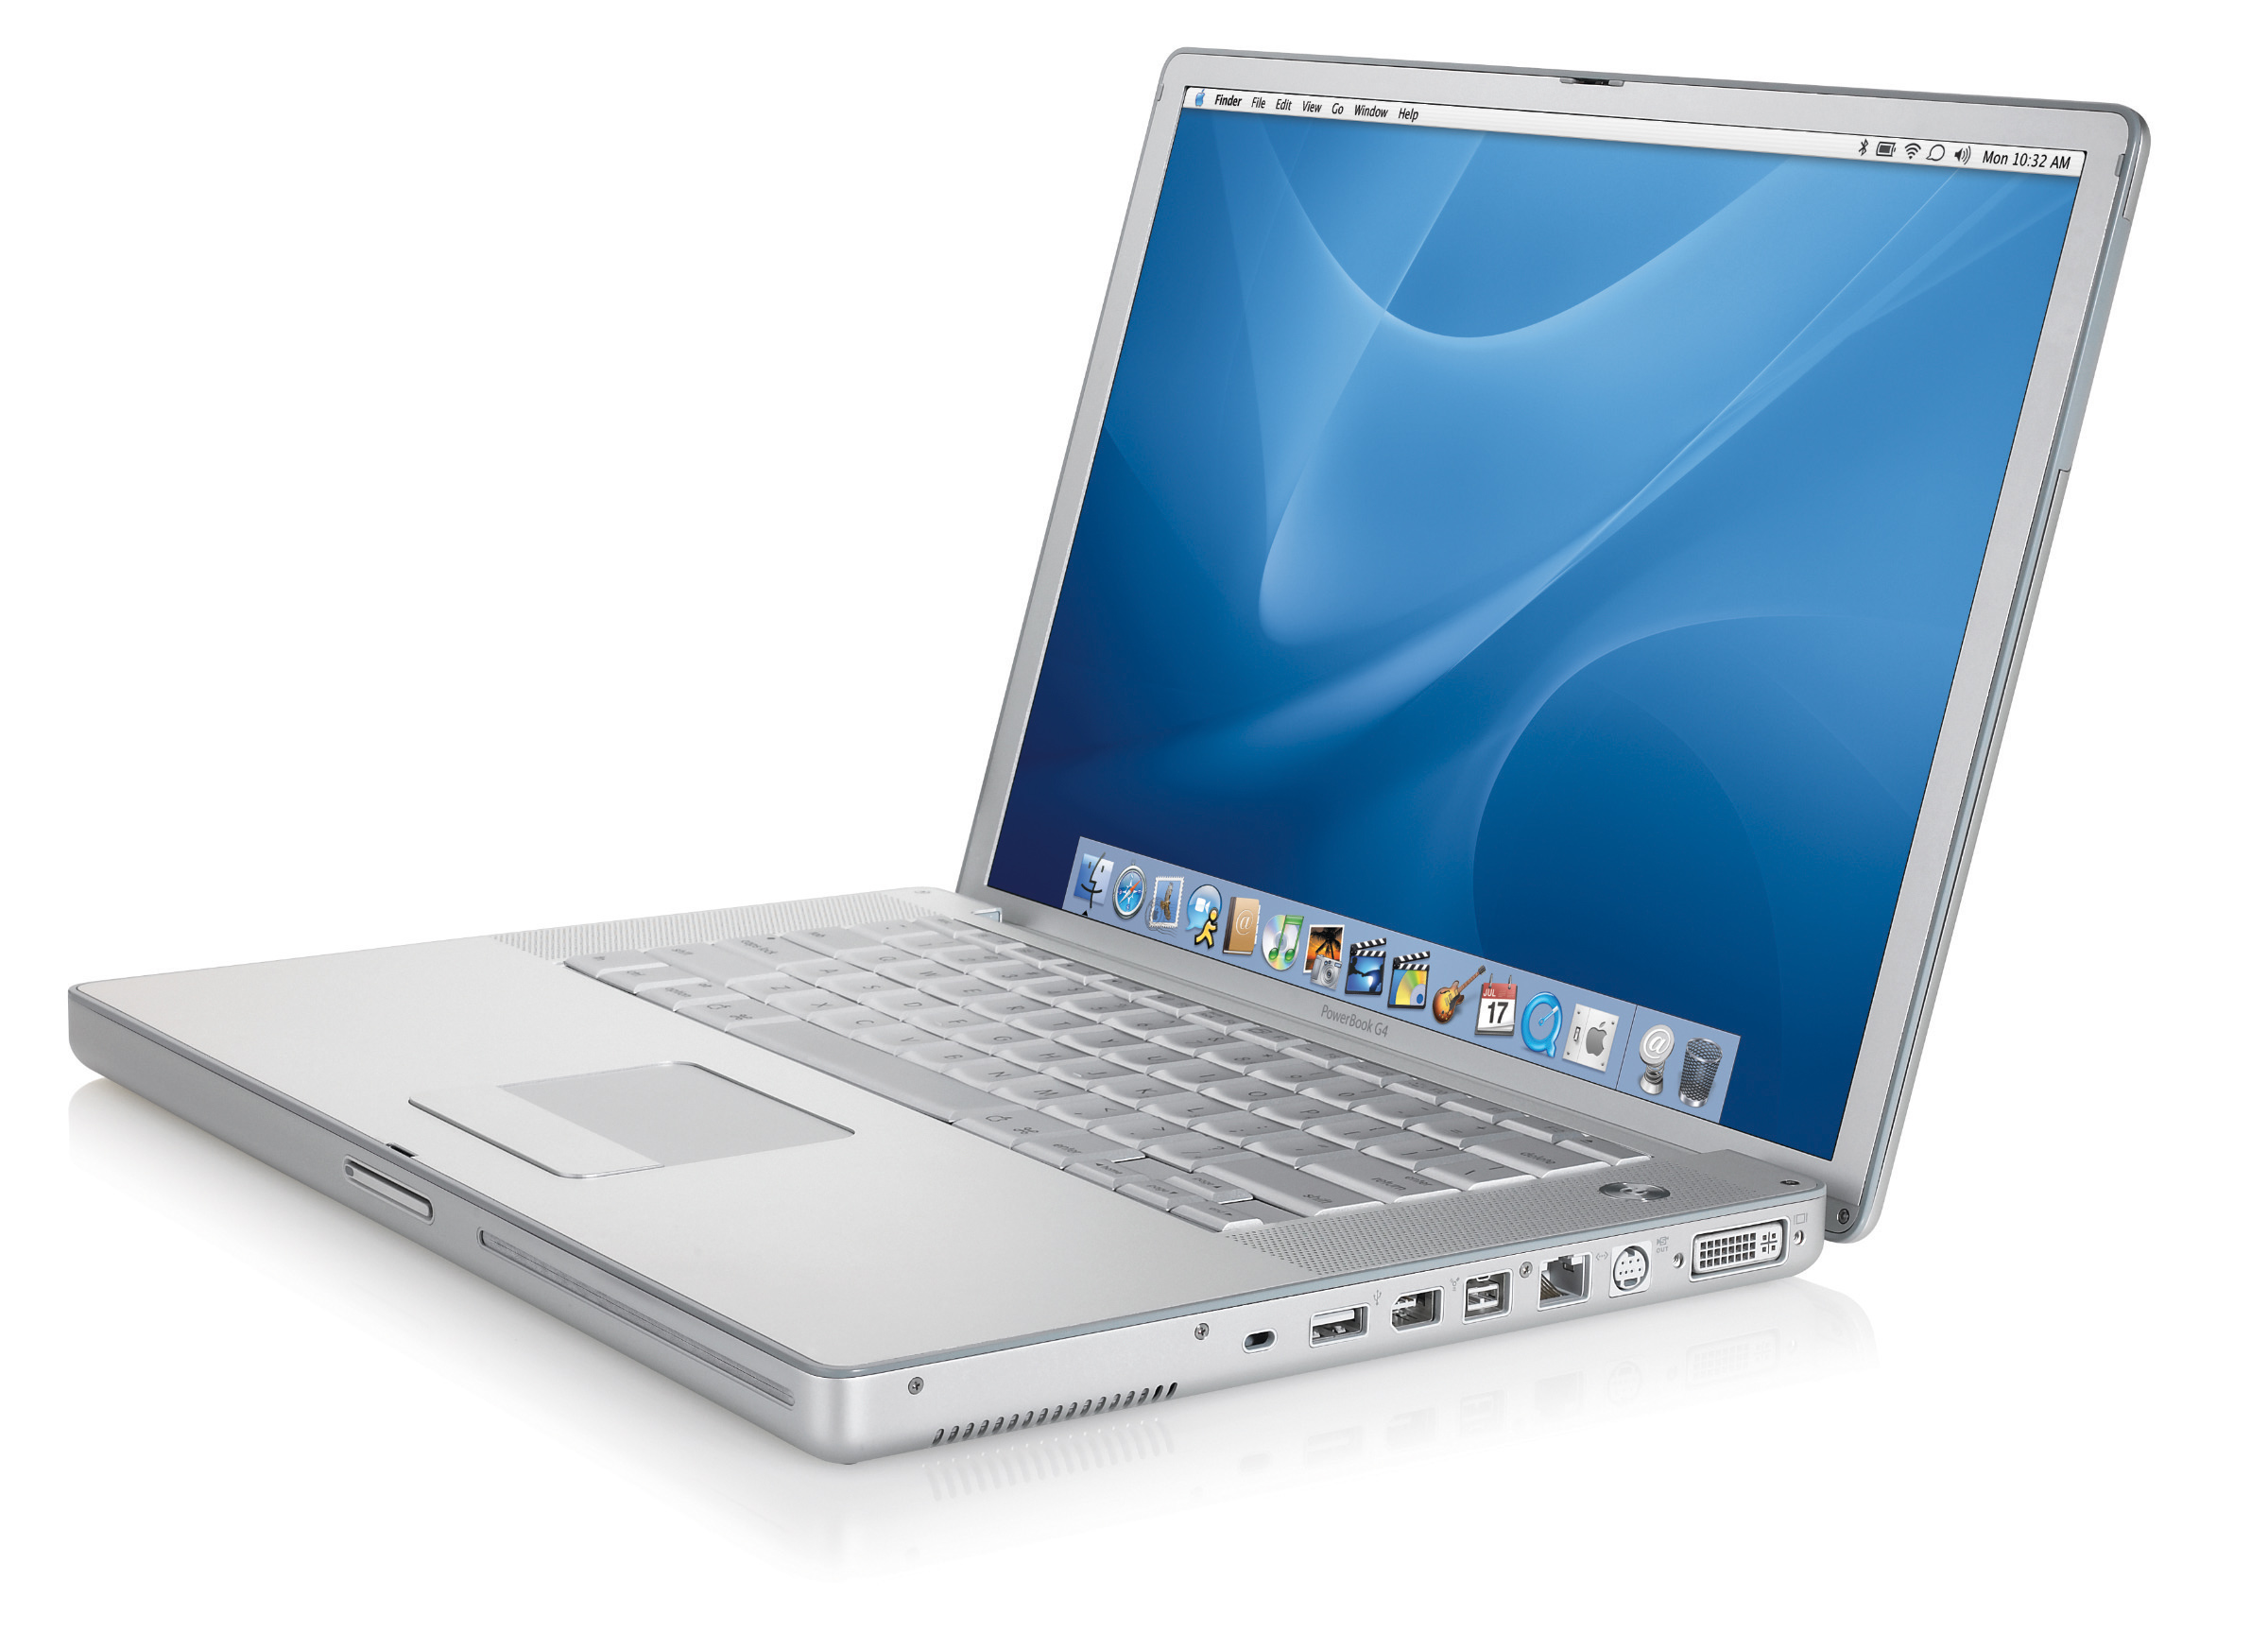 apple macbook g4 laptop